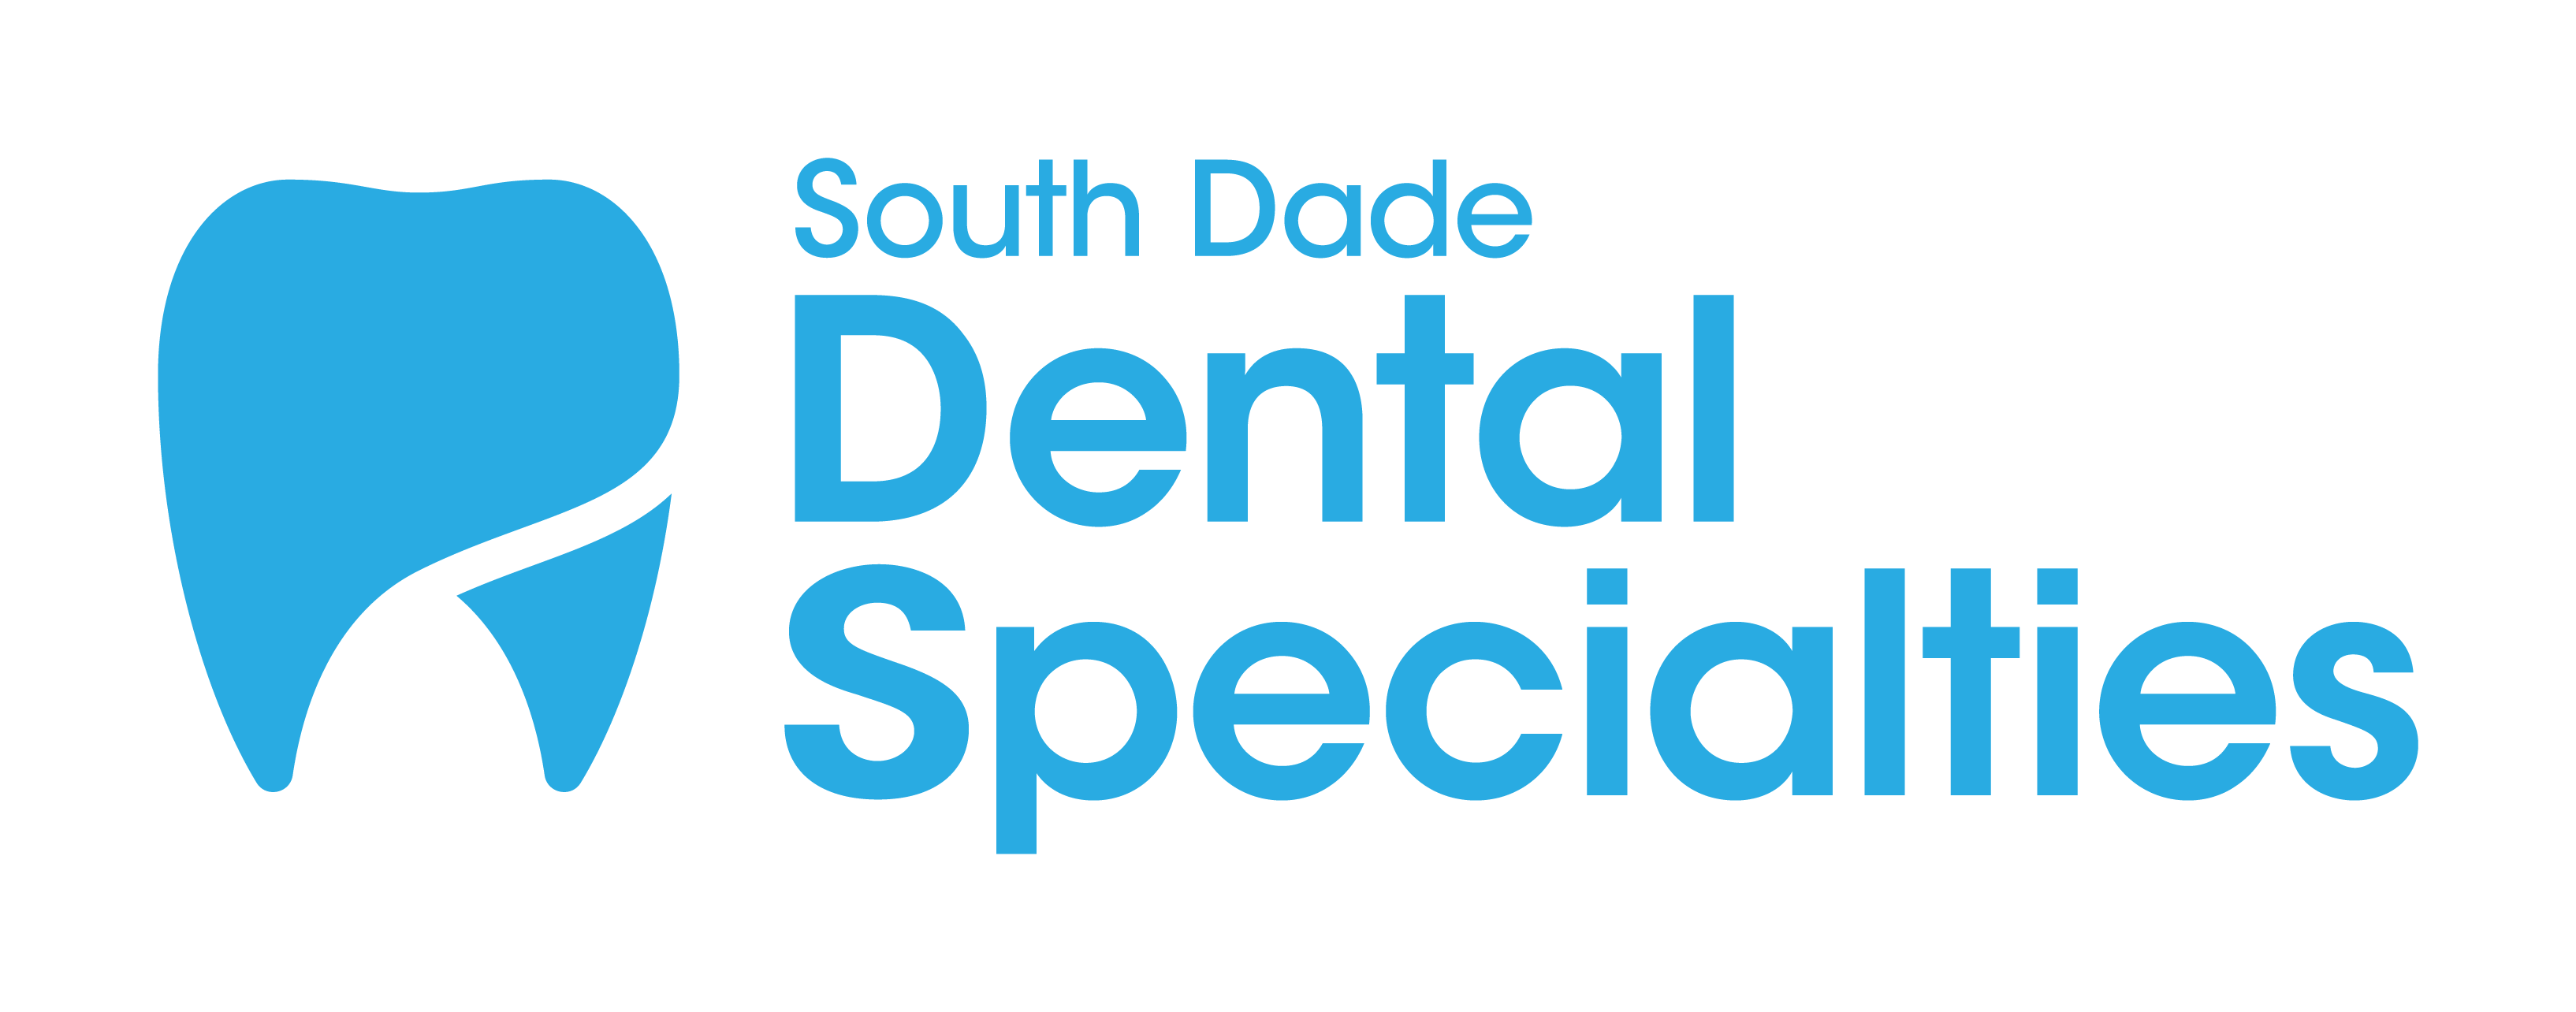 South Dade Dental Specialties Group